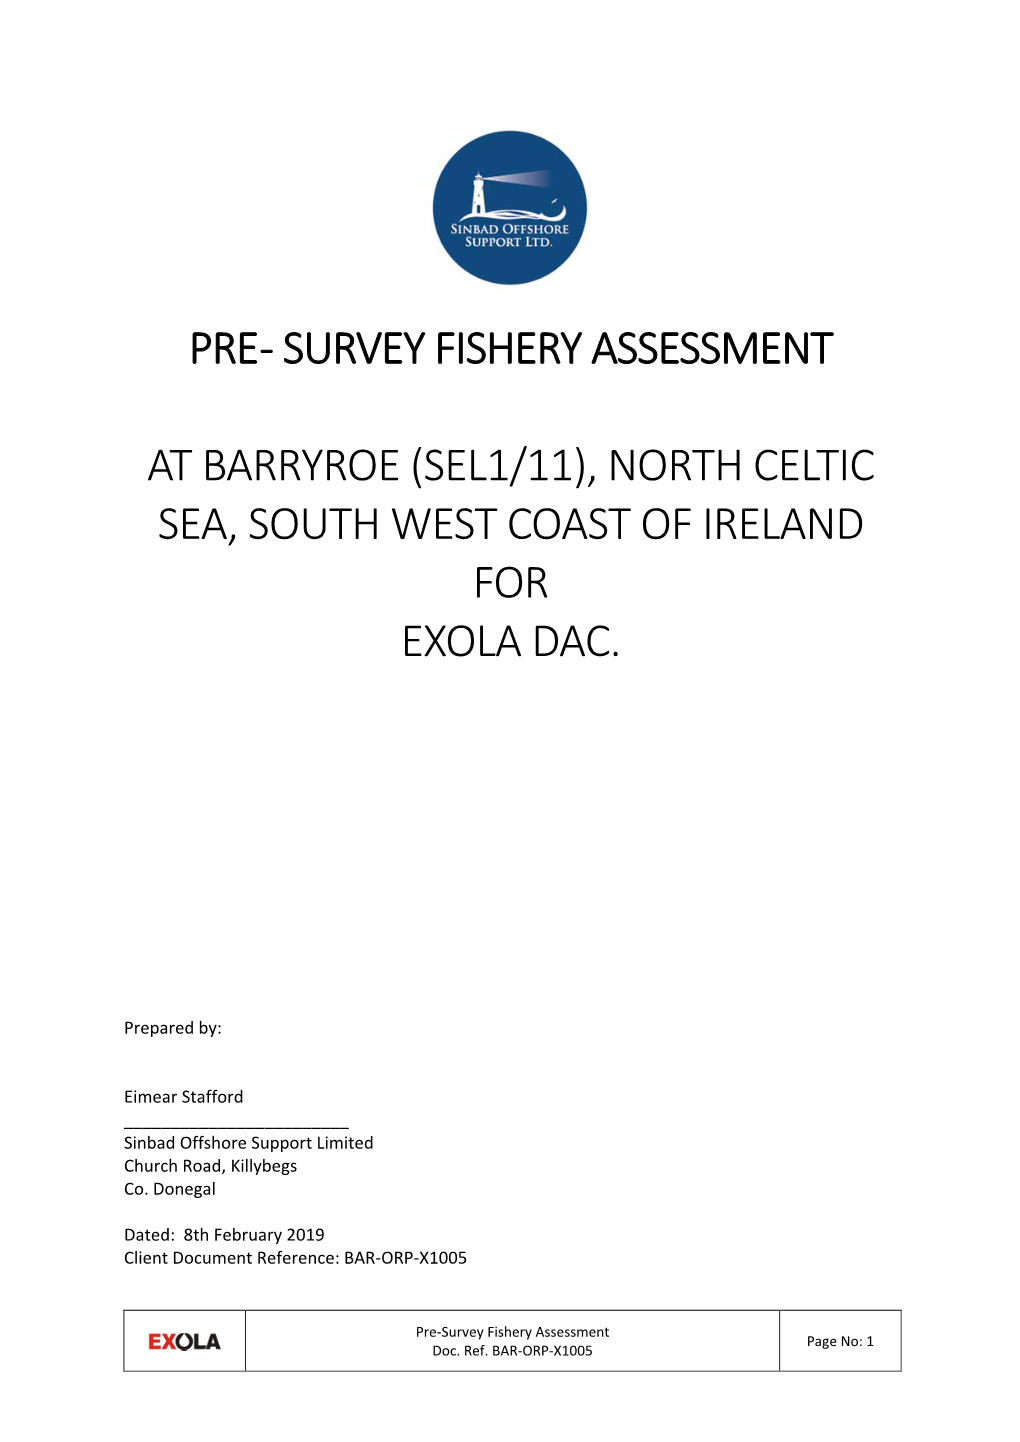 Pre - Survey Fishery Assessment